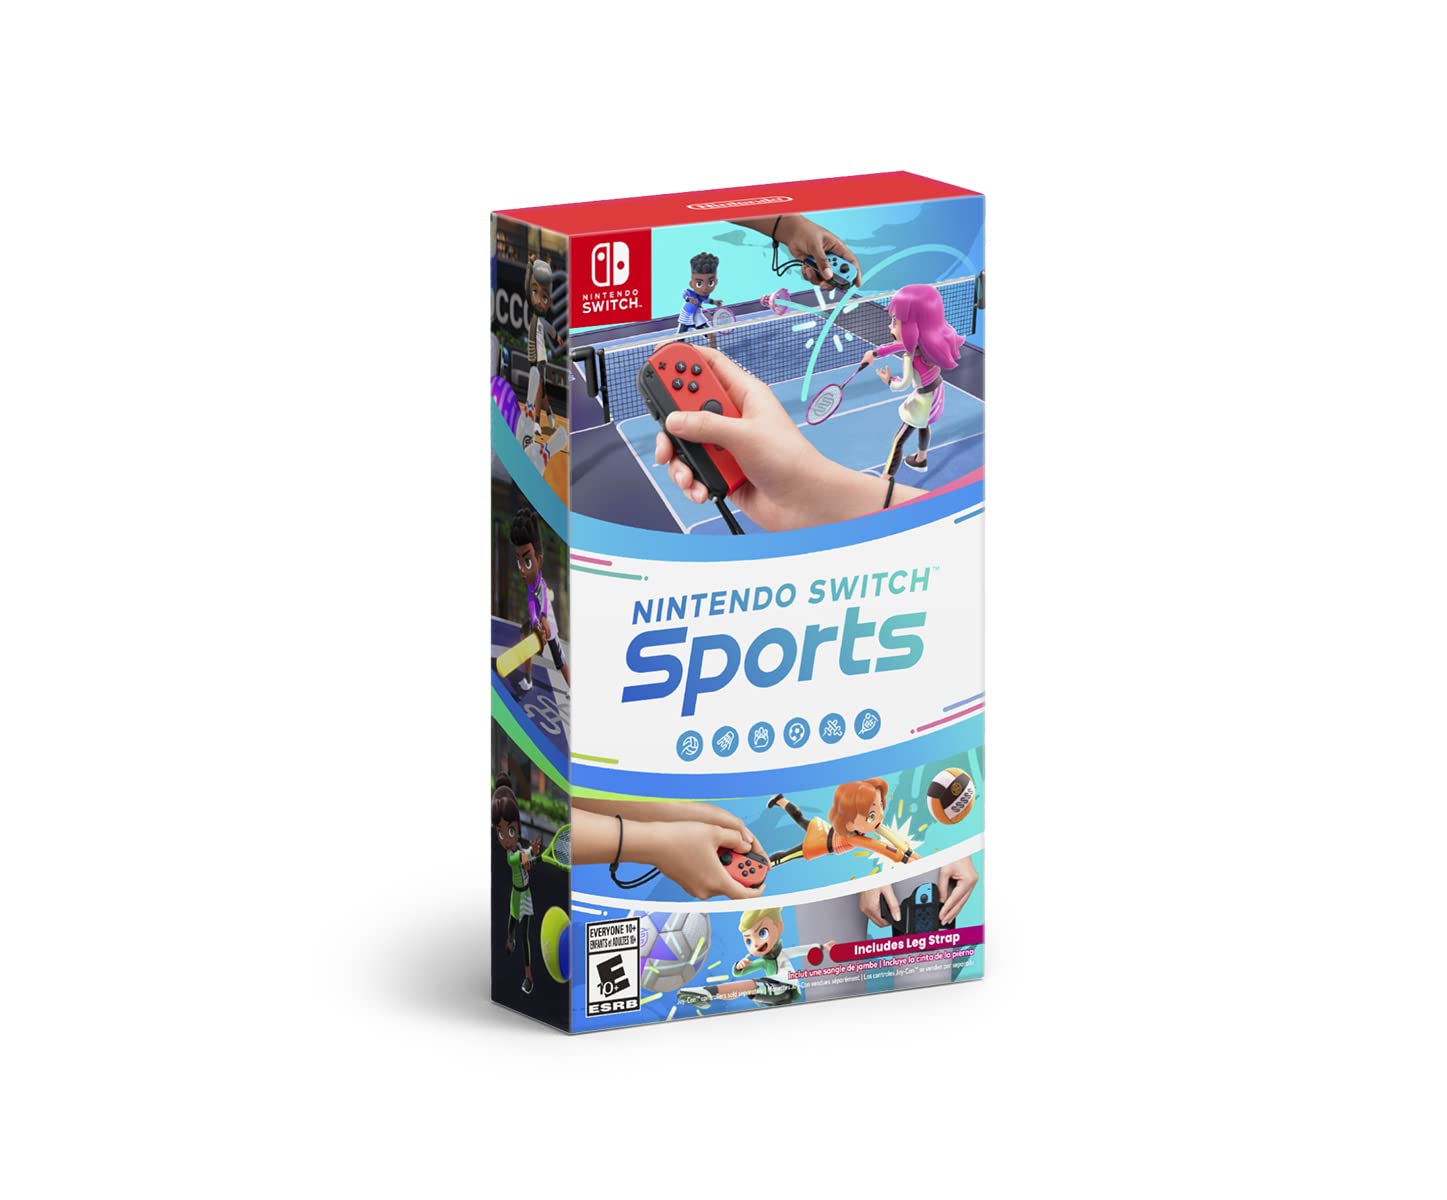 Nintendo Switch Sports game artwork.